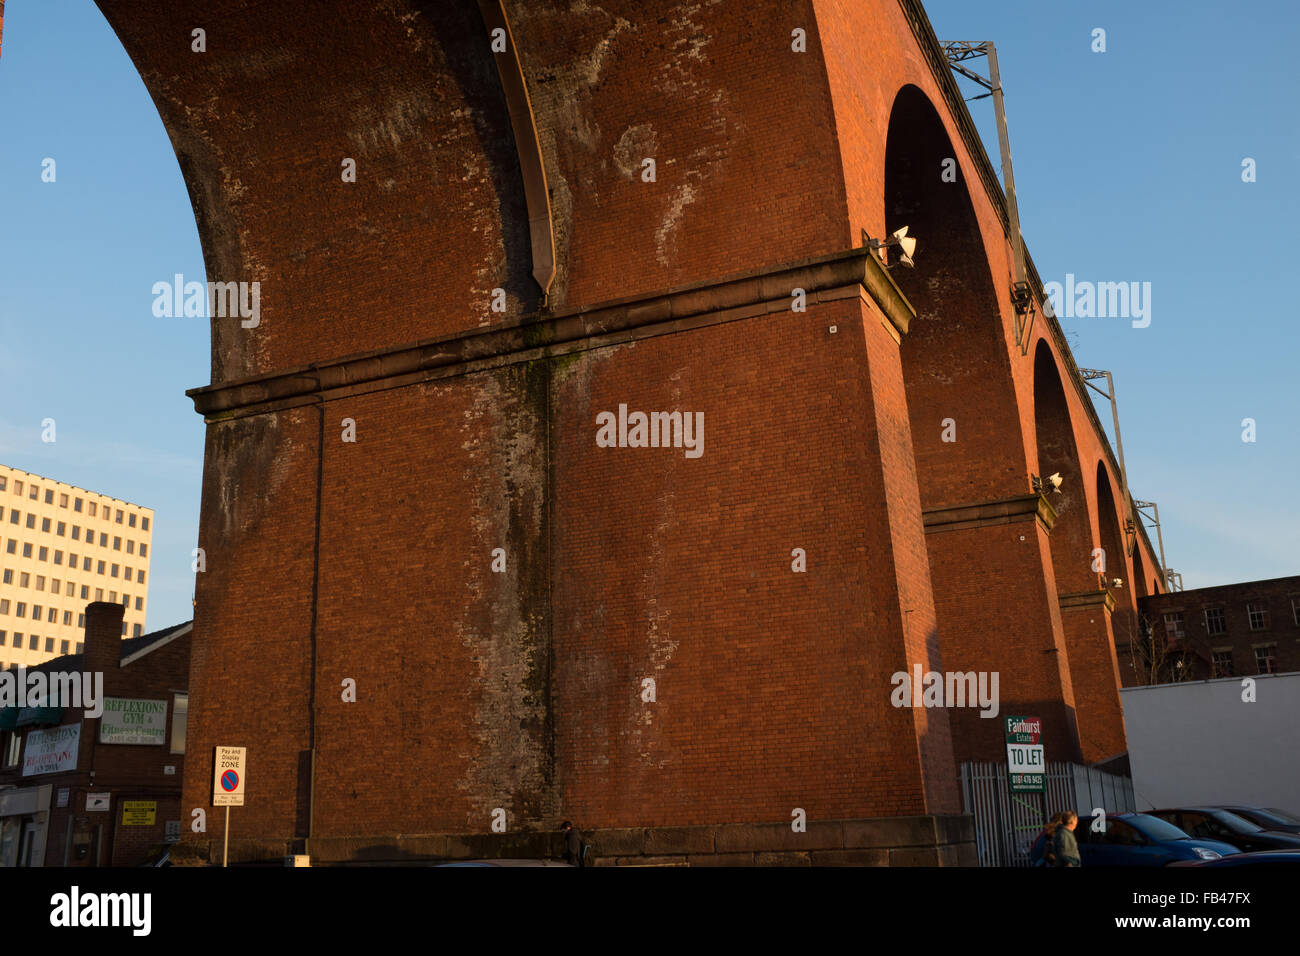 Stockport railway viaduct Stock Photo